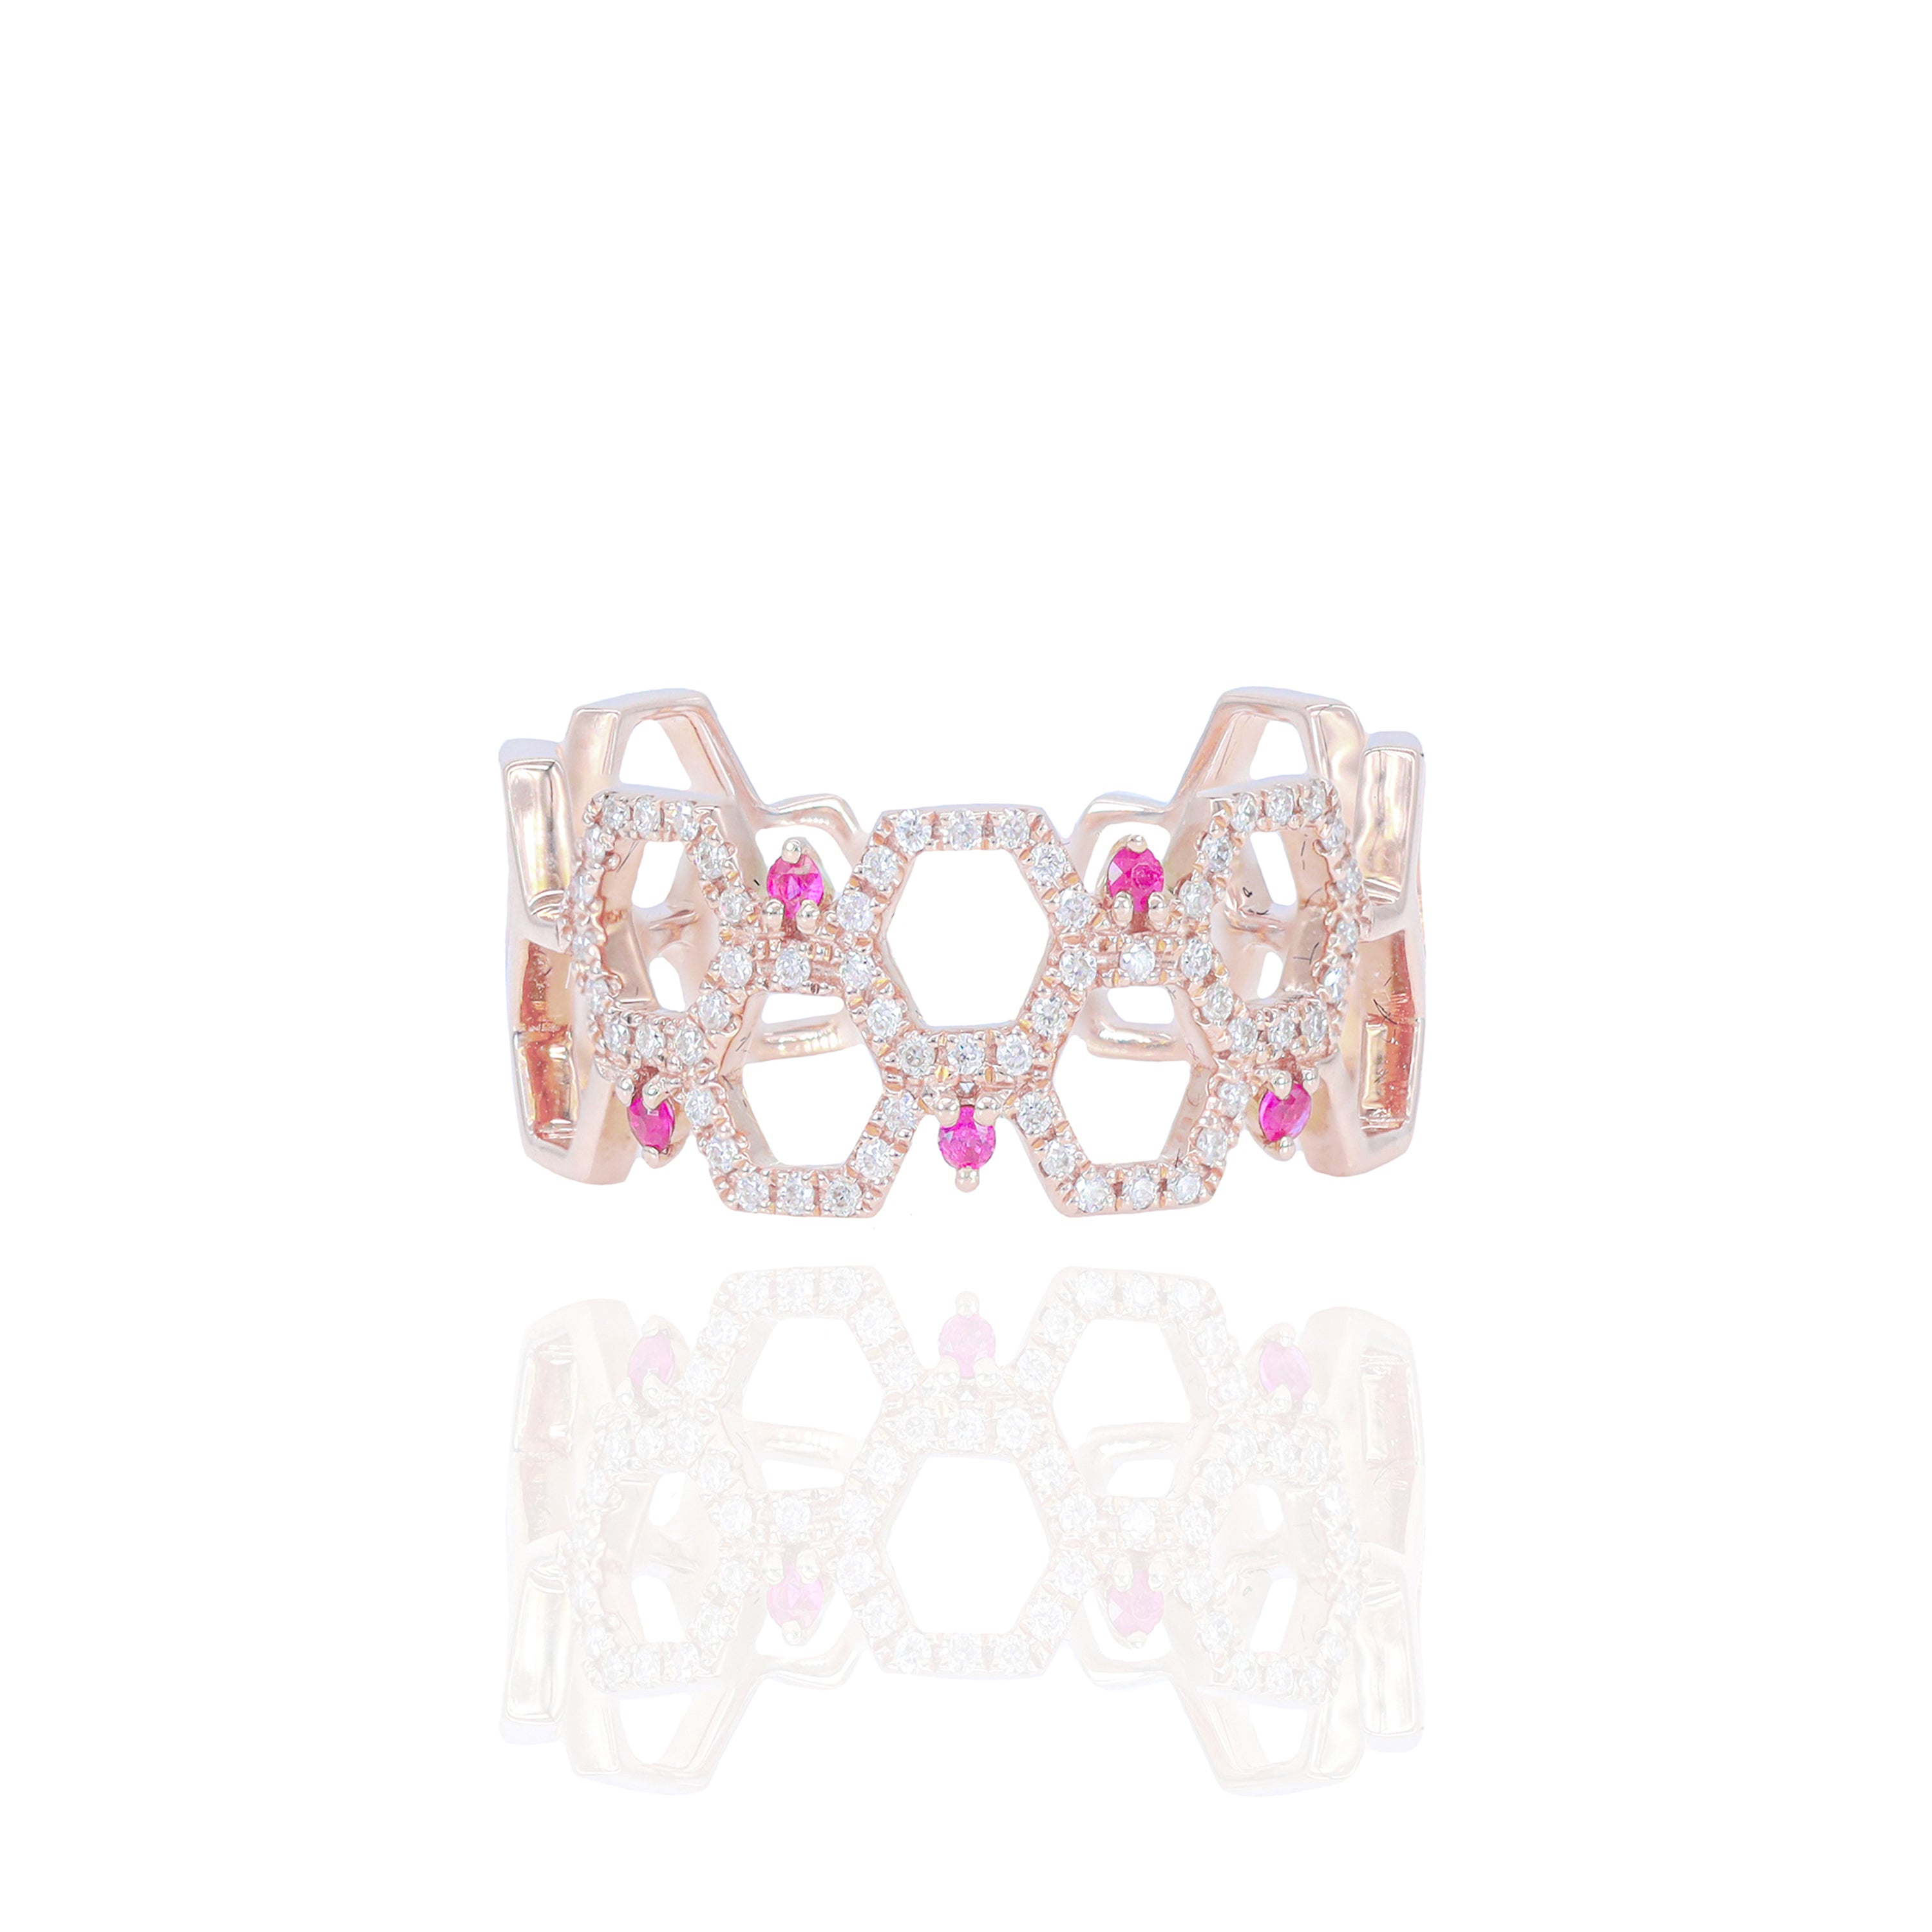 Diamond Honey-Comb Ring with Gemstones